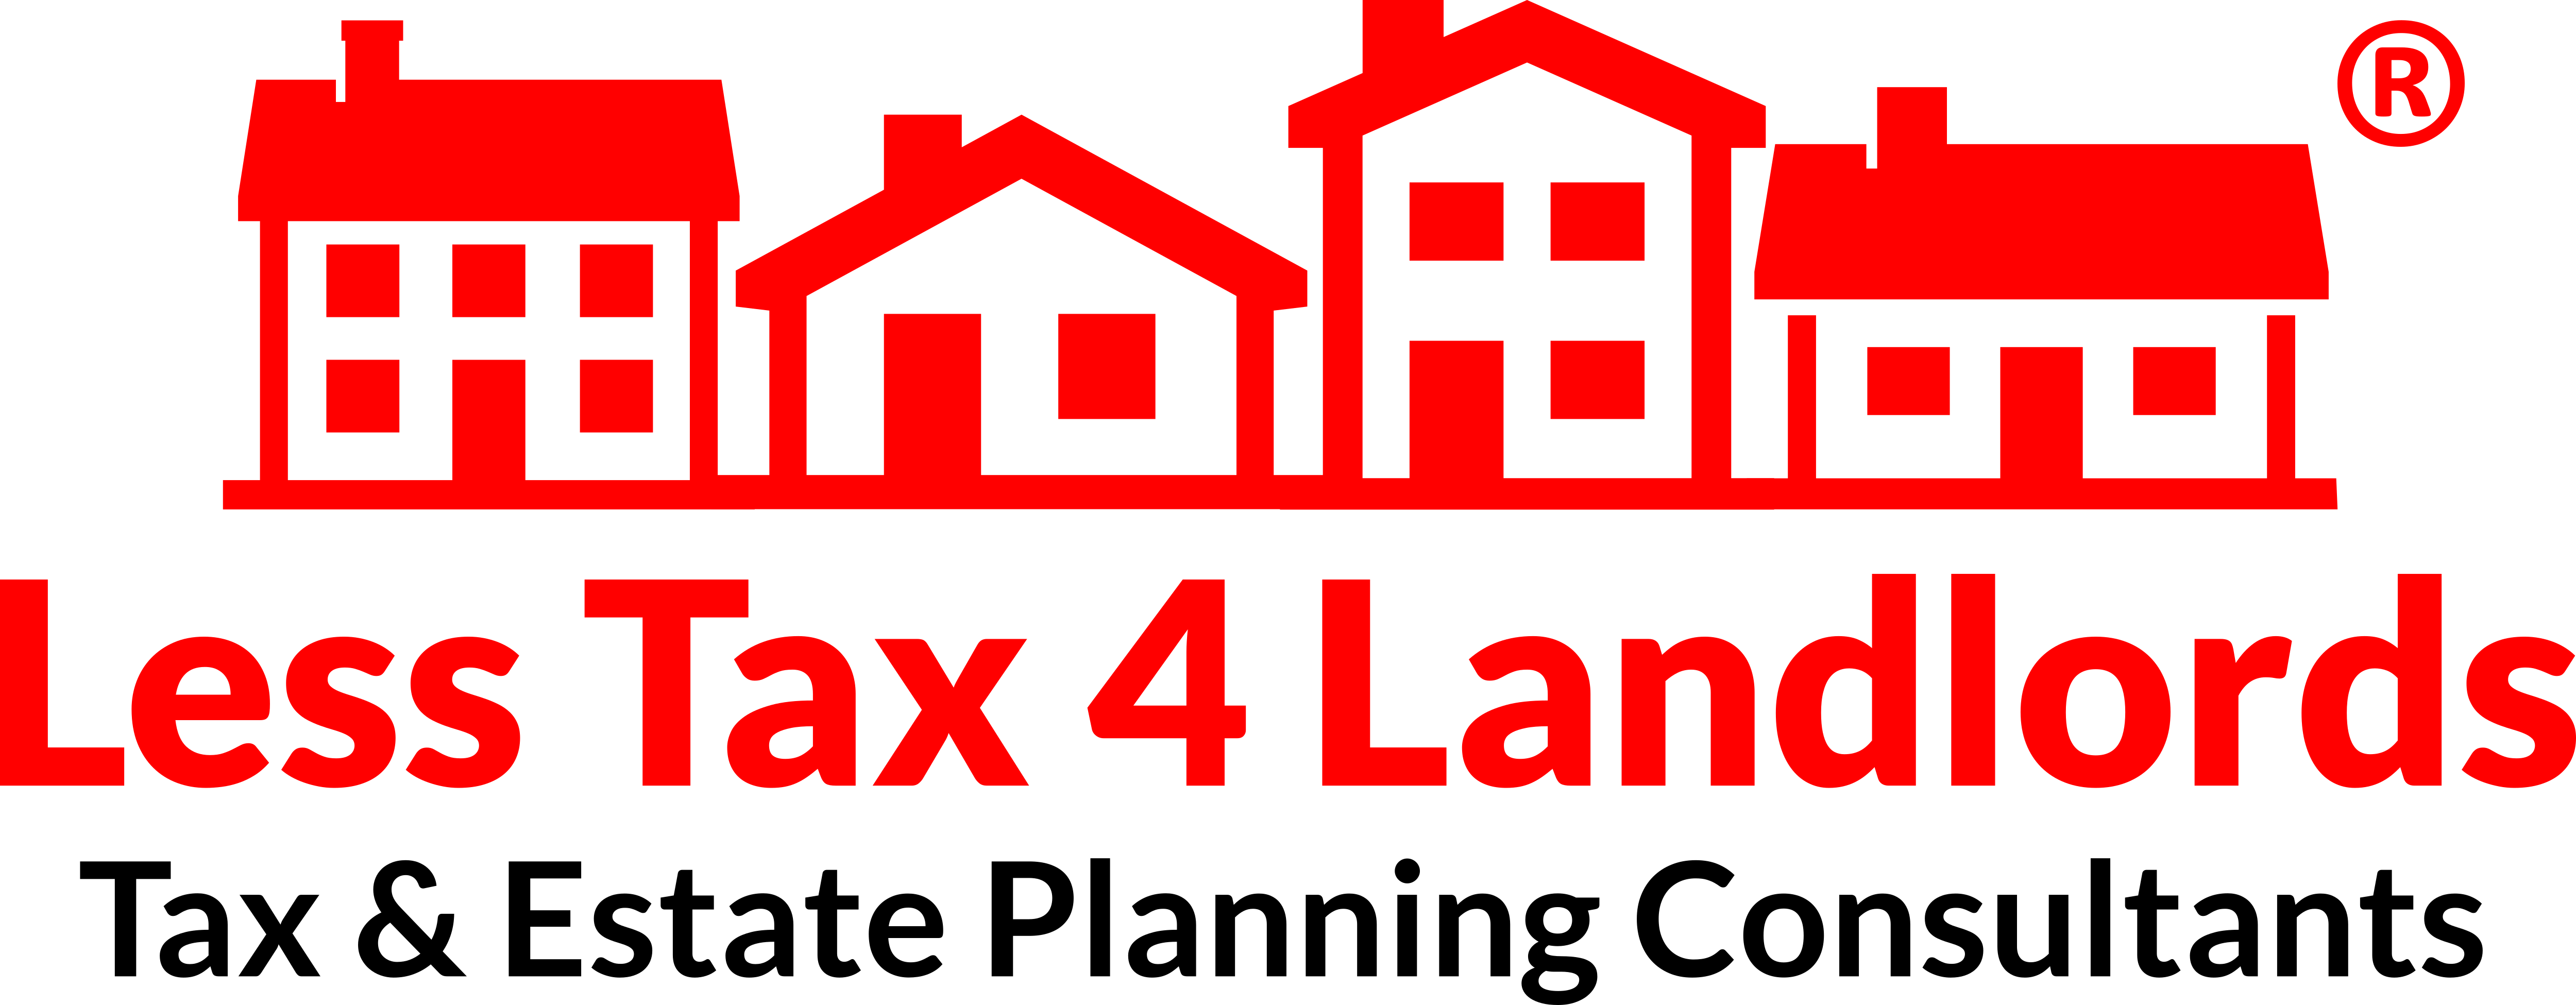 Less Tax 4 Landlords